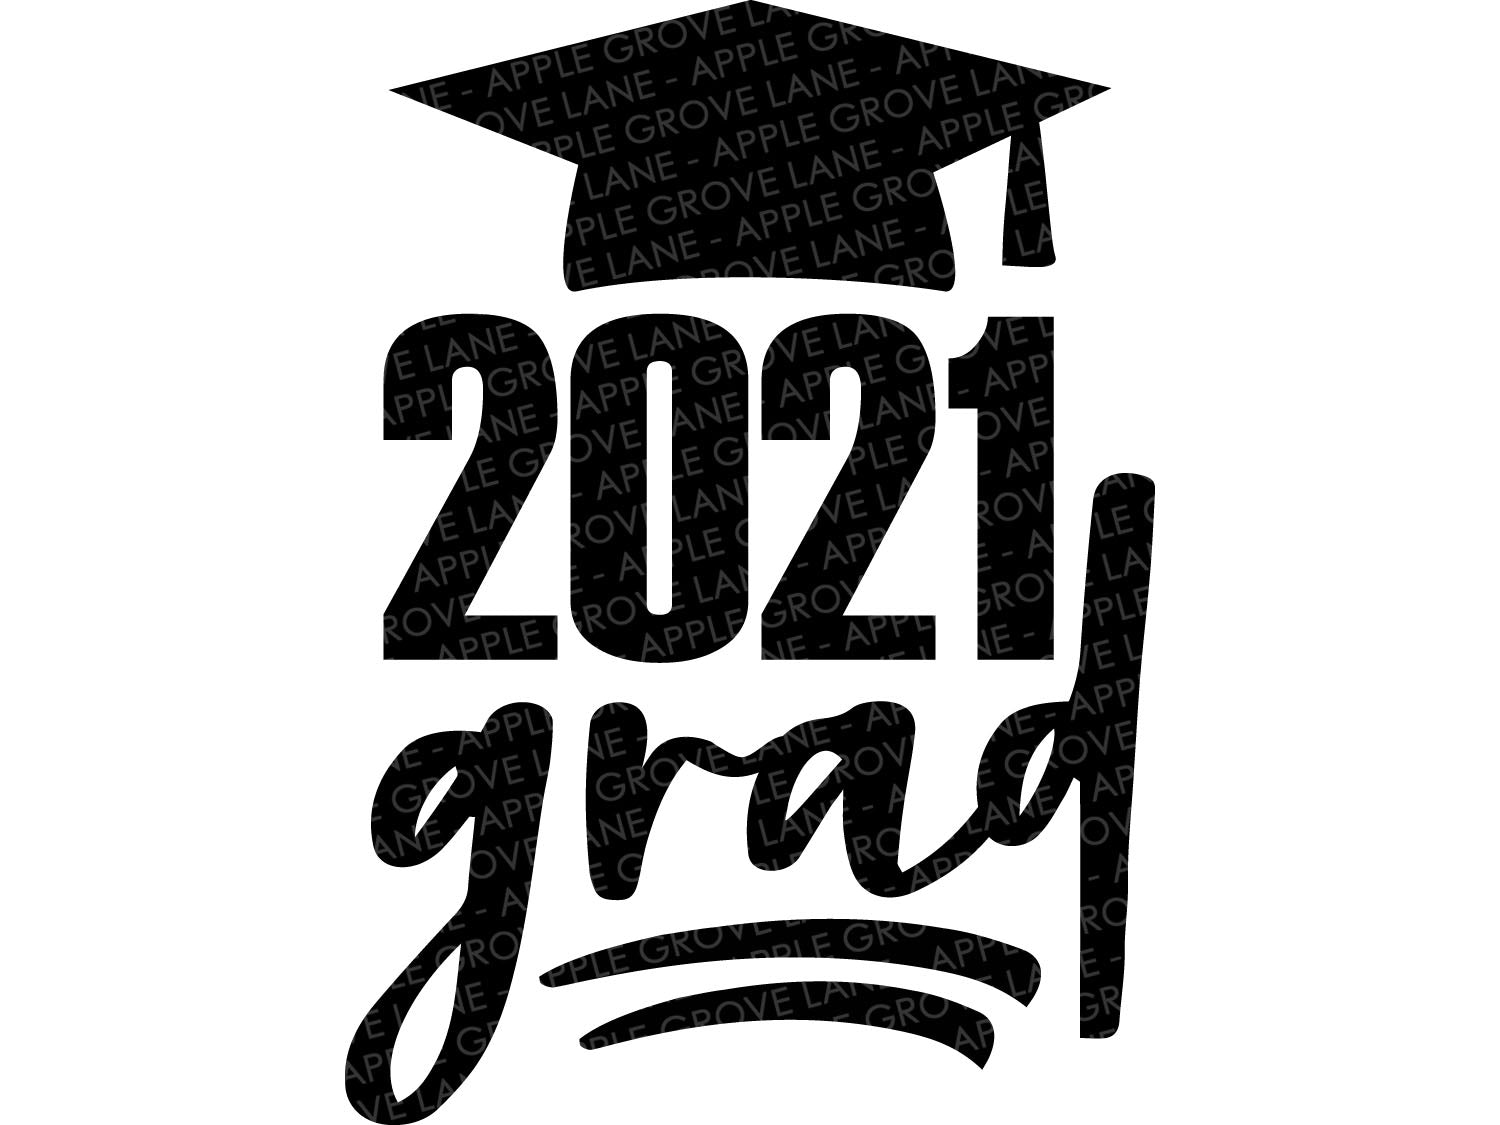 2021 Grad Svg Class Of 2021 Svg 2021 Svg 2021 Graduation Svg G Apple Grove Lane